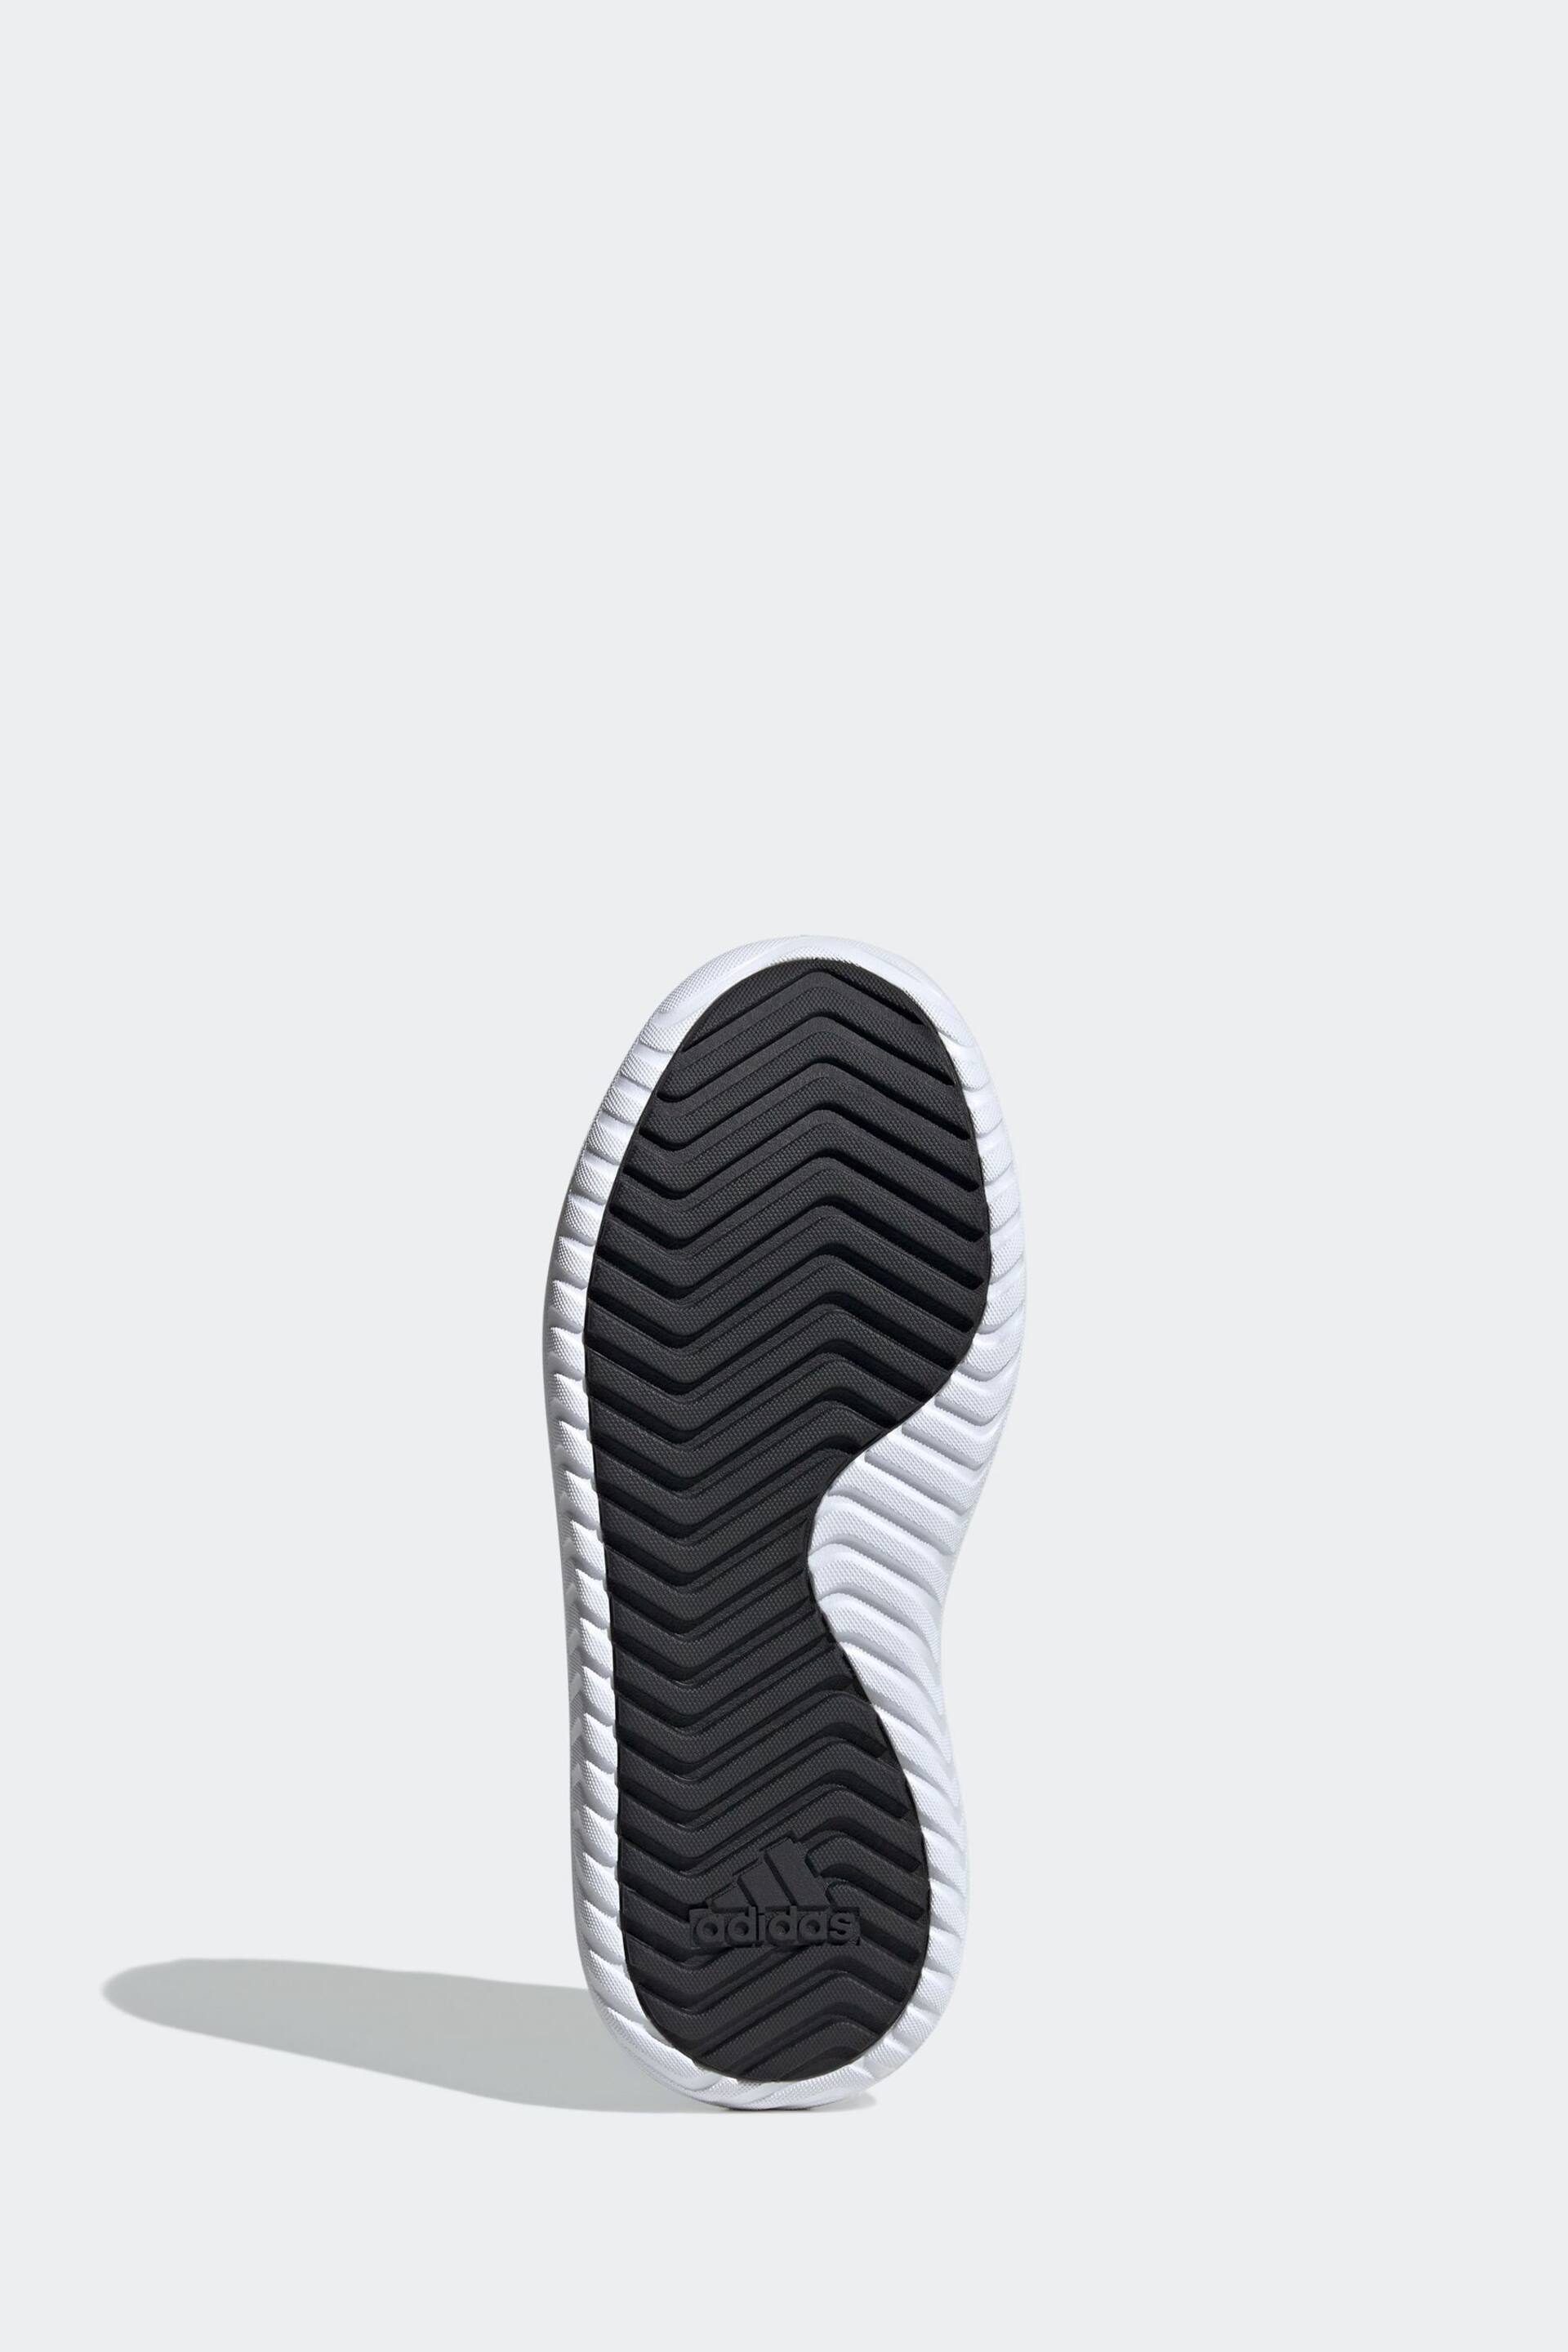 adidas balck White Grand Court Platform Trainers - Image 6 of 8